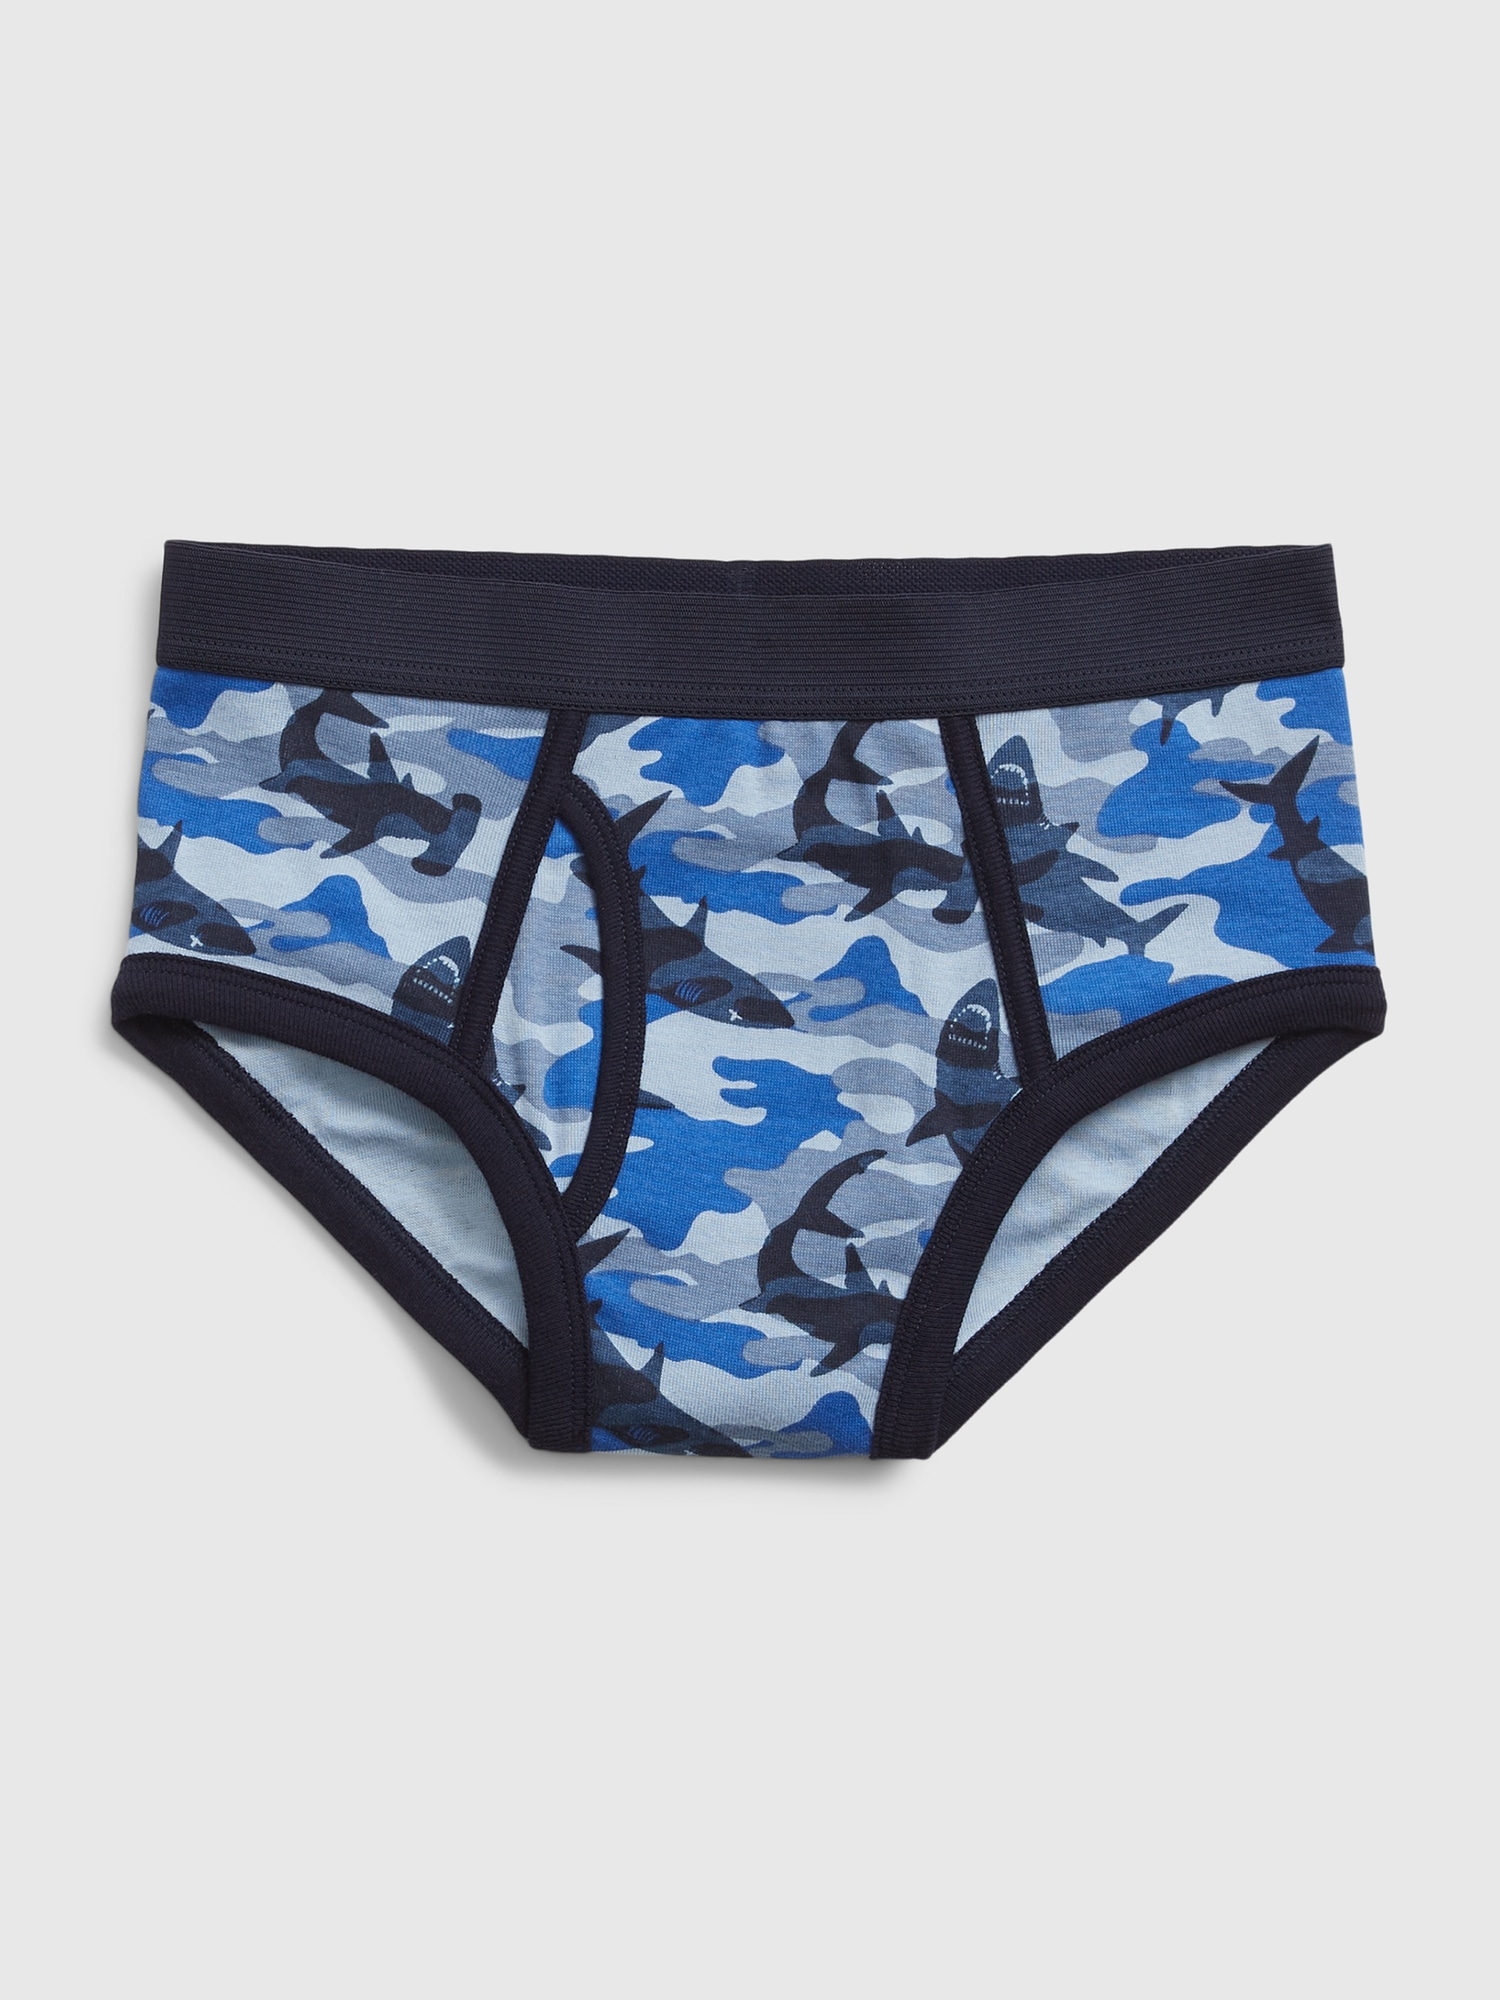 PINKFONG] Baby Shark Kids 100% Cotton Underwear Panties 5P/Boys/Girls/